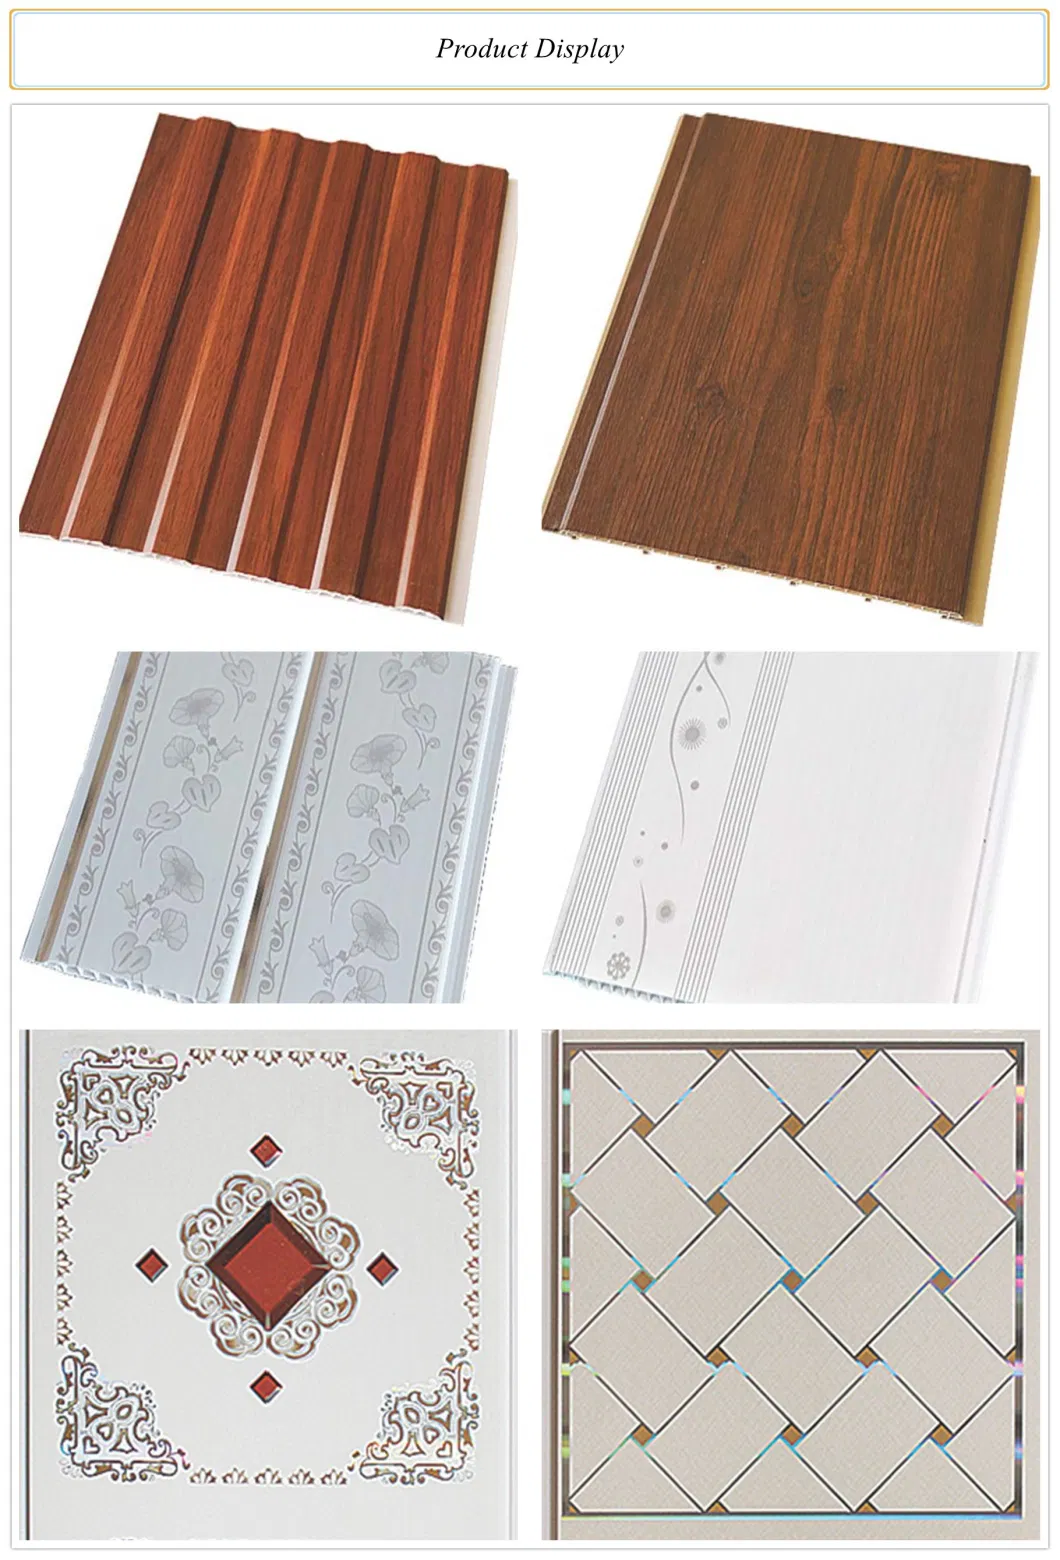 Interlocking Plastic Tile PVC Hot Stamping Wall Ceiling Panels PVC Ceiling Tile